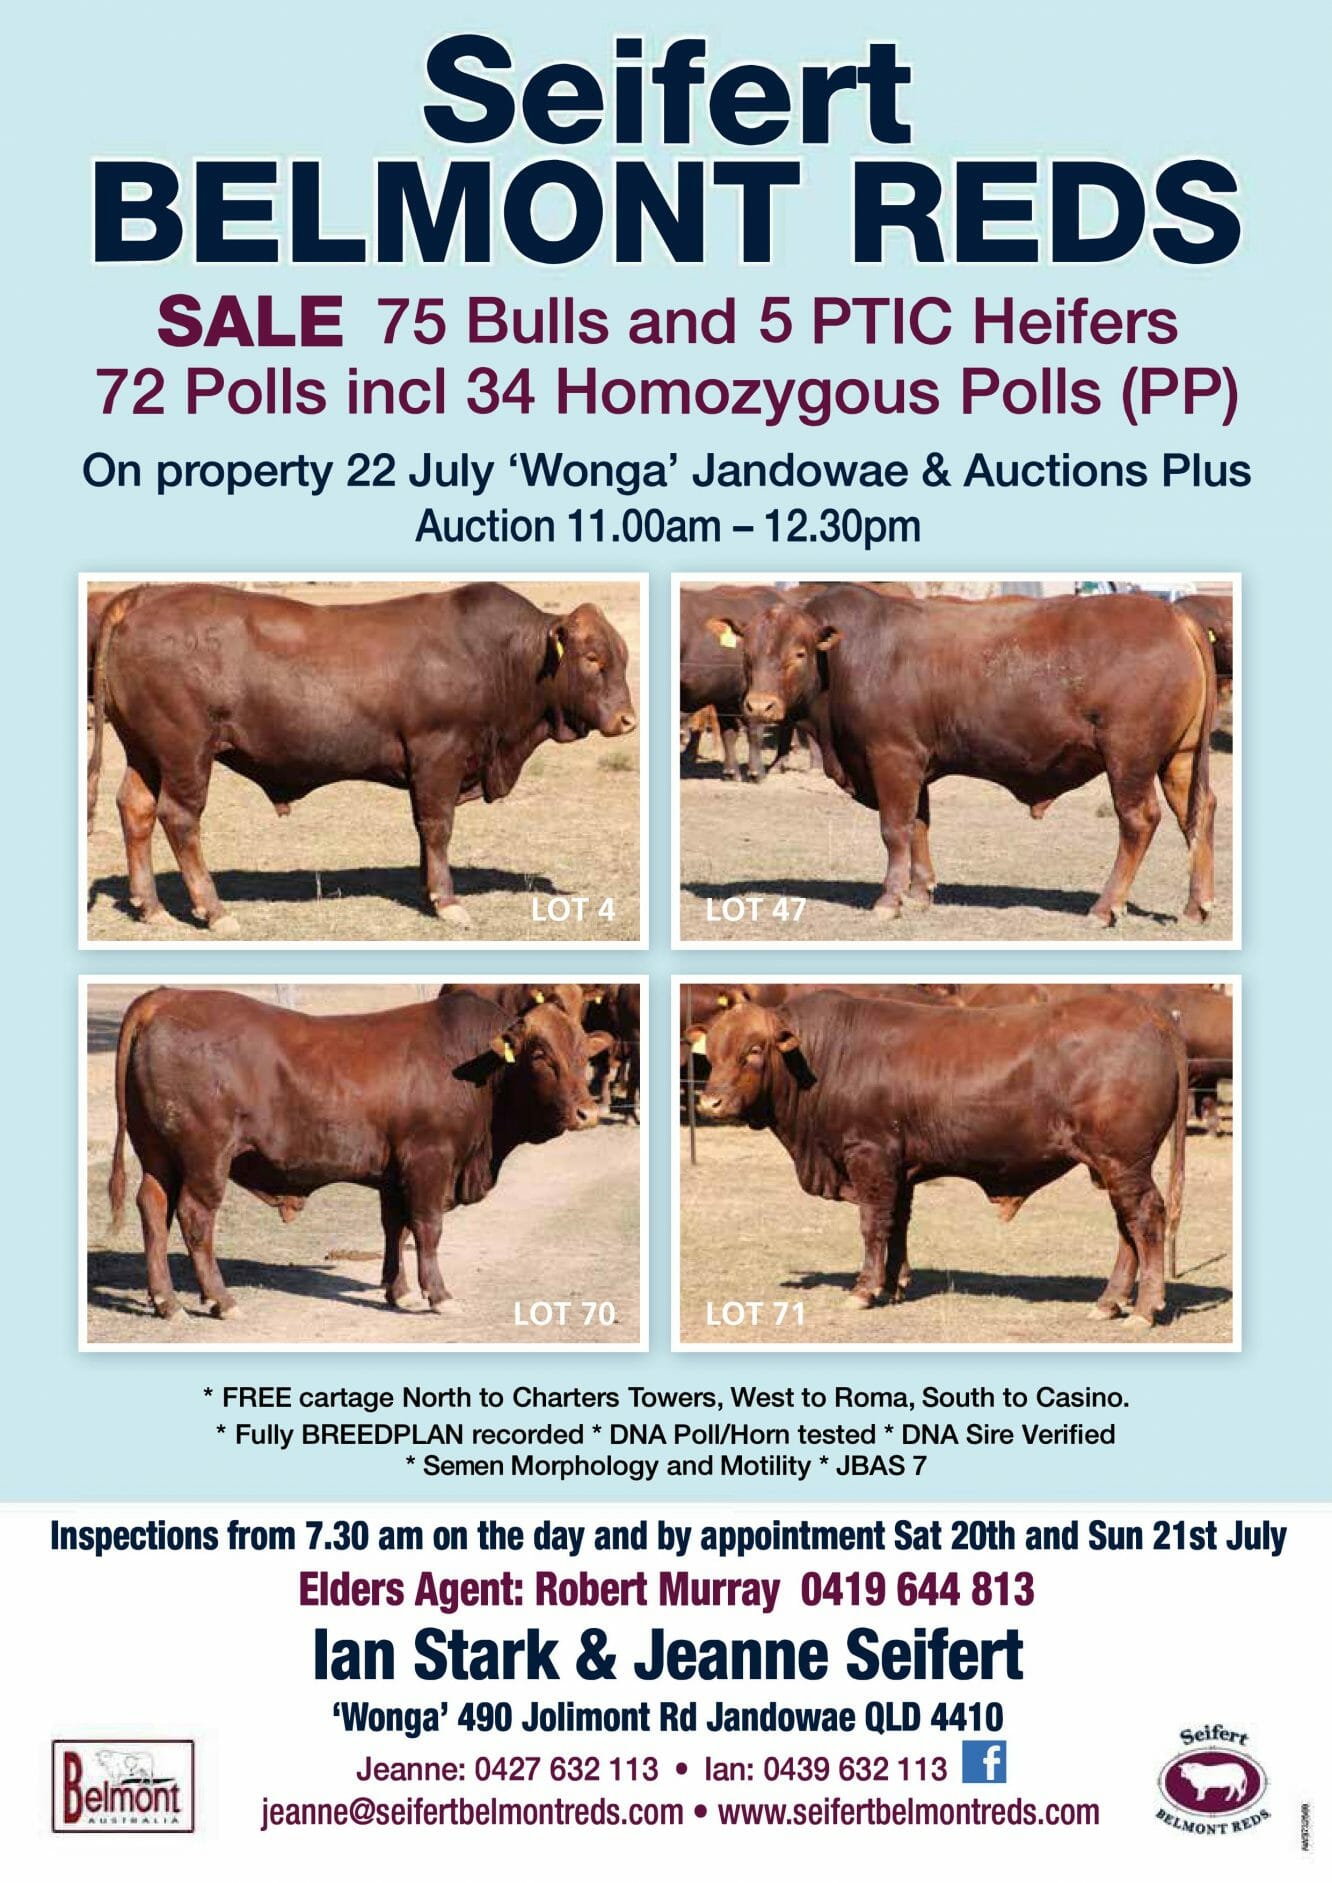 Seifert Belmont Reds Bull Sale Catalogue 2019 Front Cover